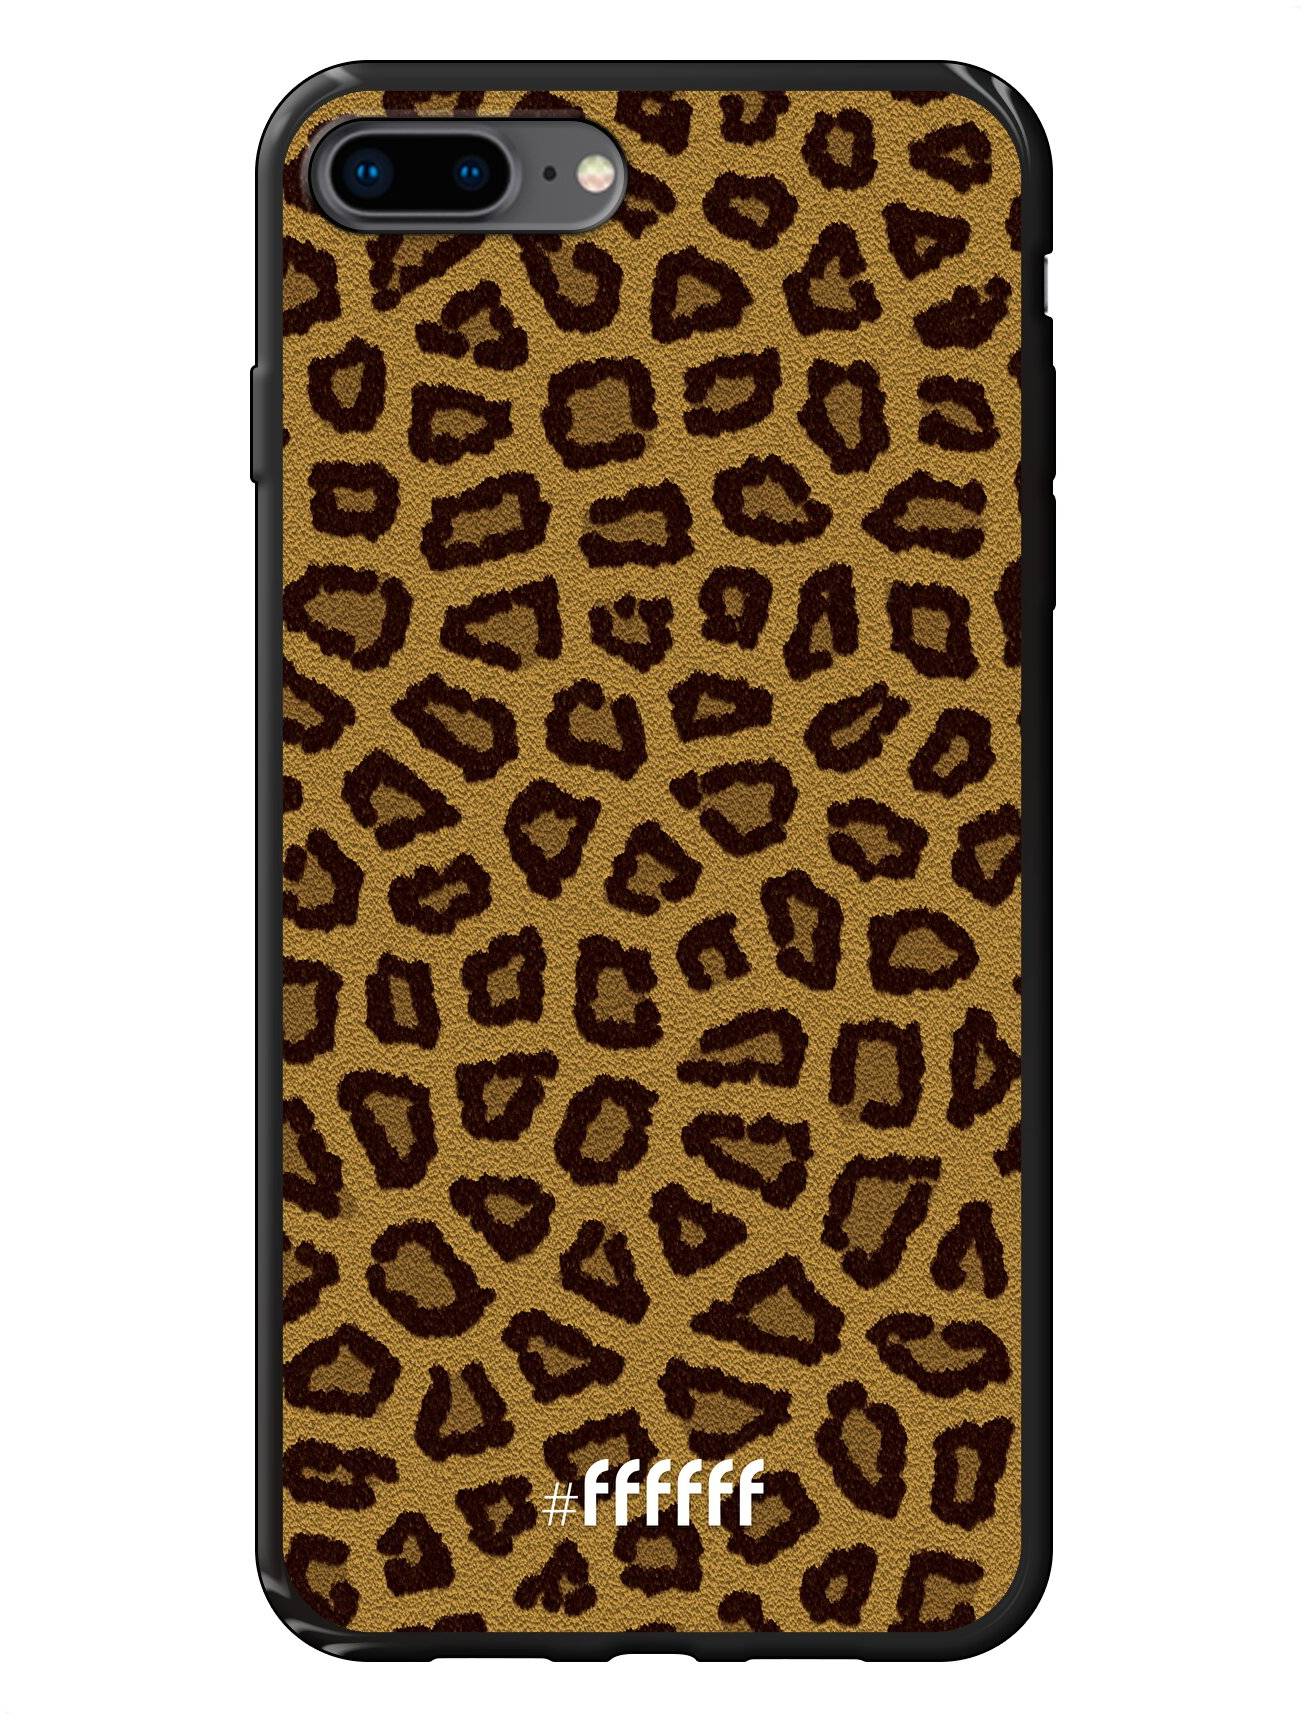 Leopard Print iPhone 8 Plus